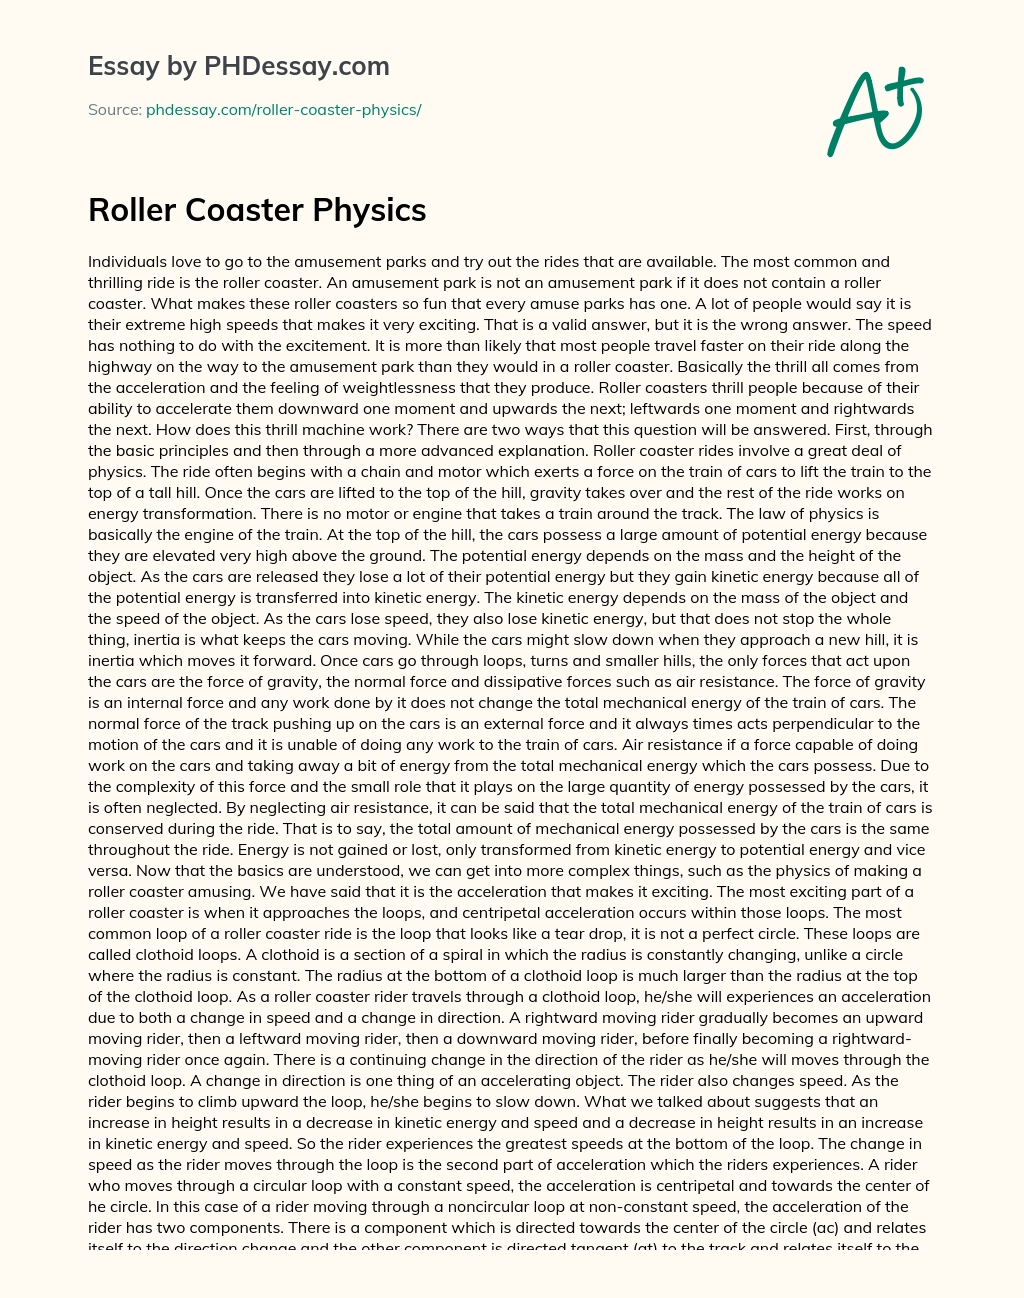 Roller Coaster Physics essay